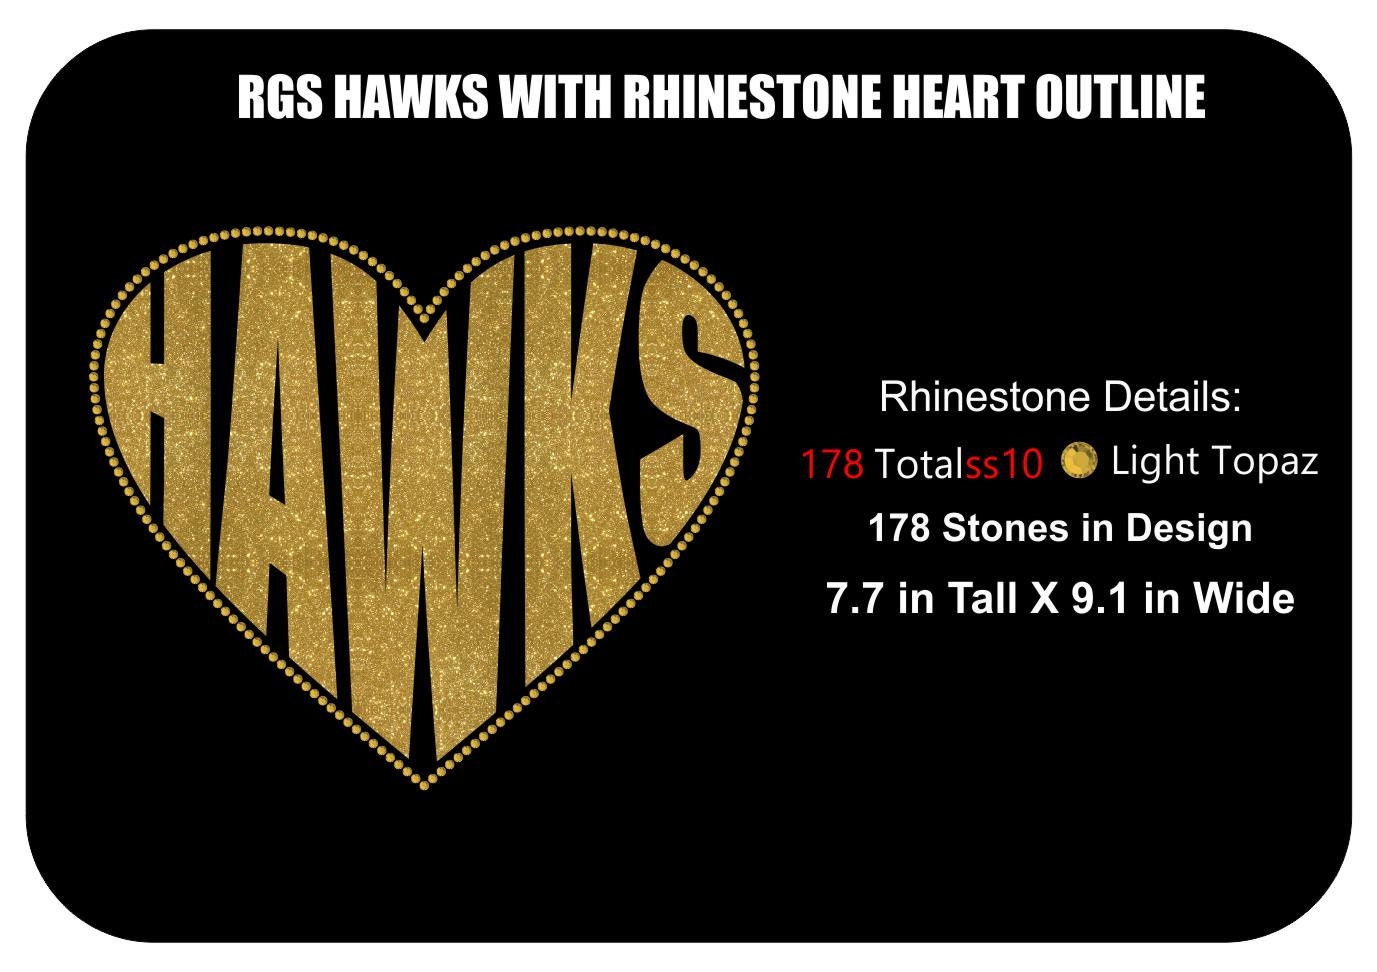 Rhinestone Heart Outline